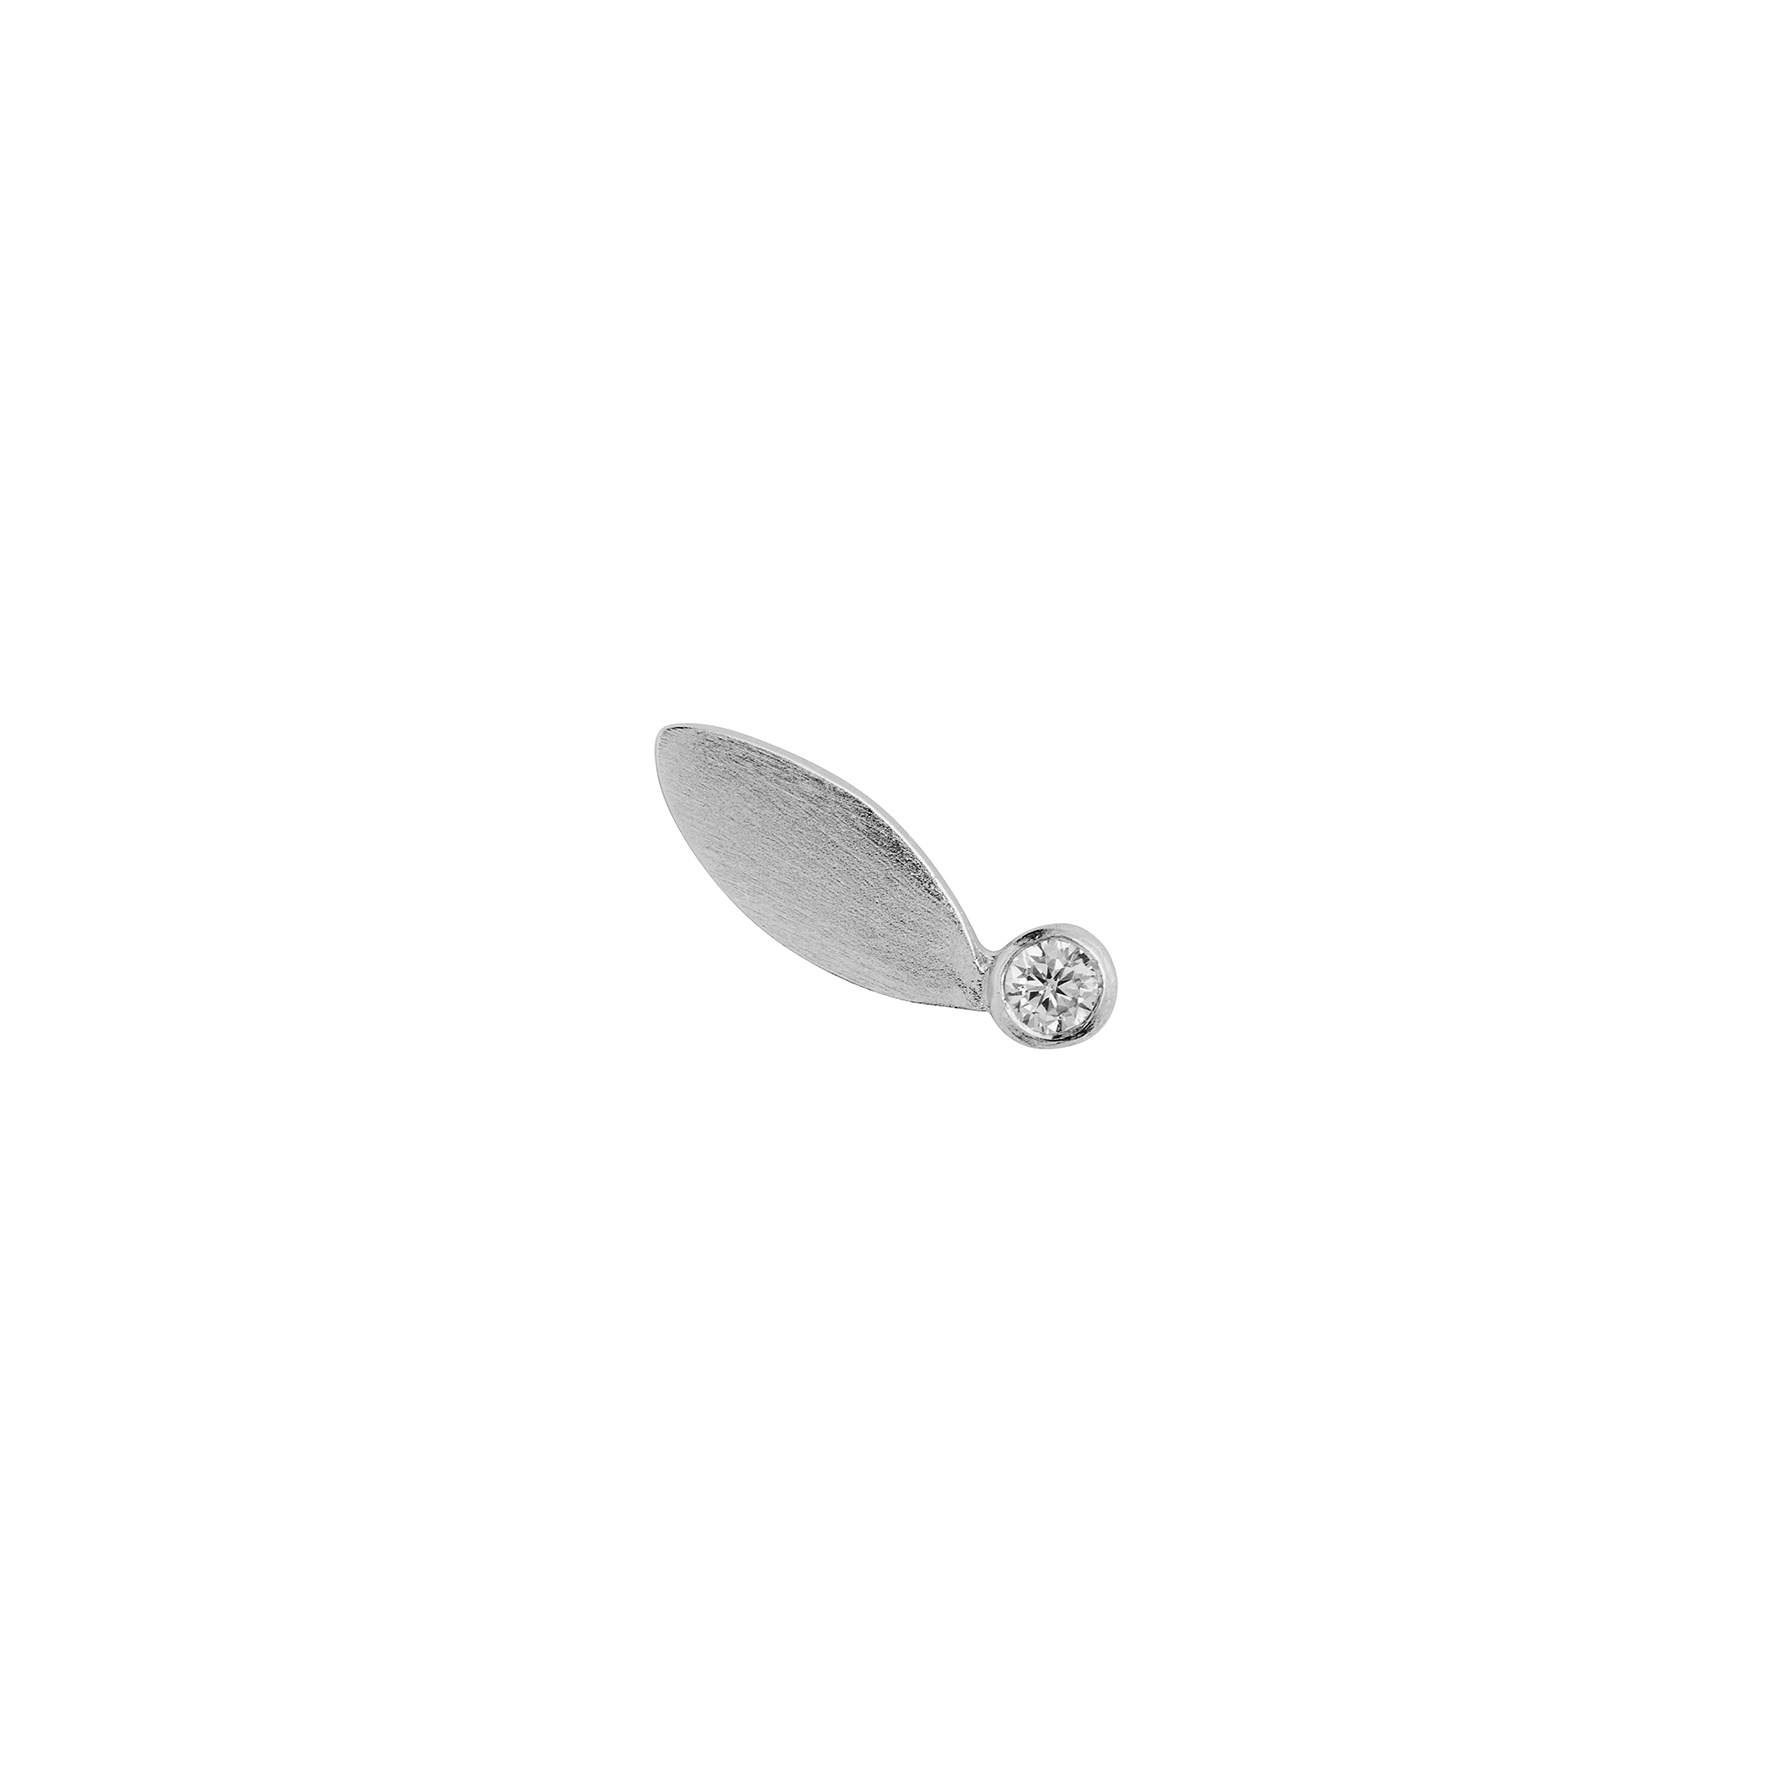 Big Dot Leaf Earstick Light Peridot från STINE A Jewelry i Silver Sterling 925|